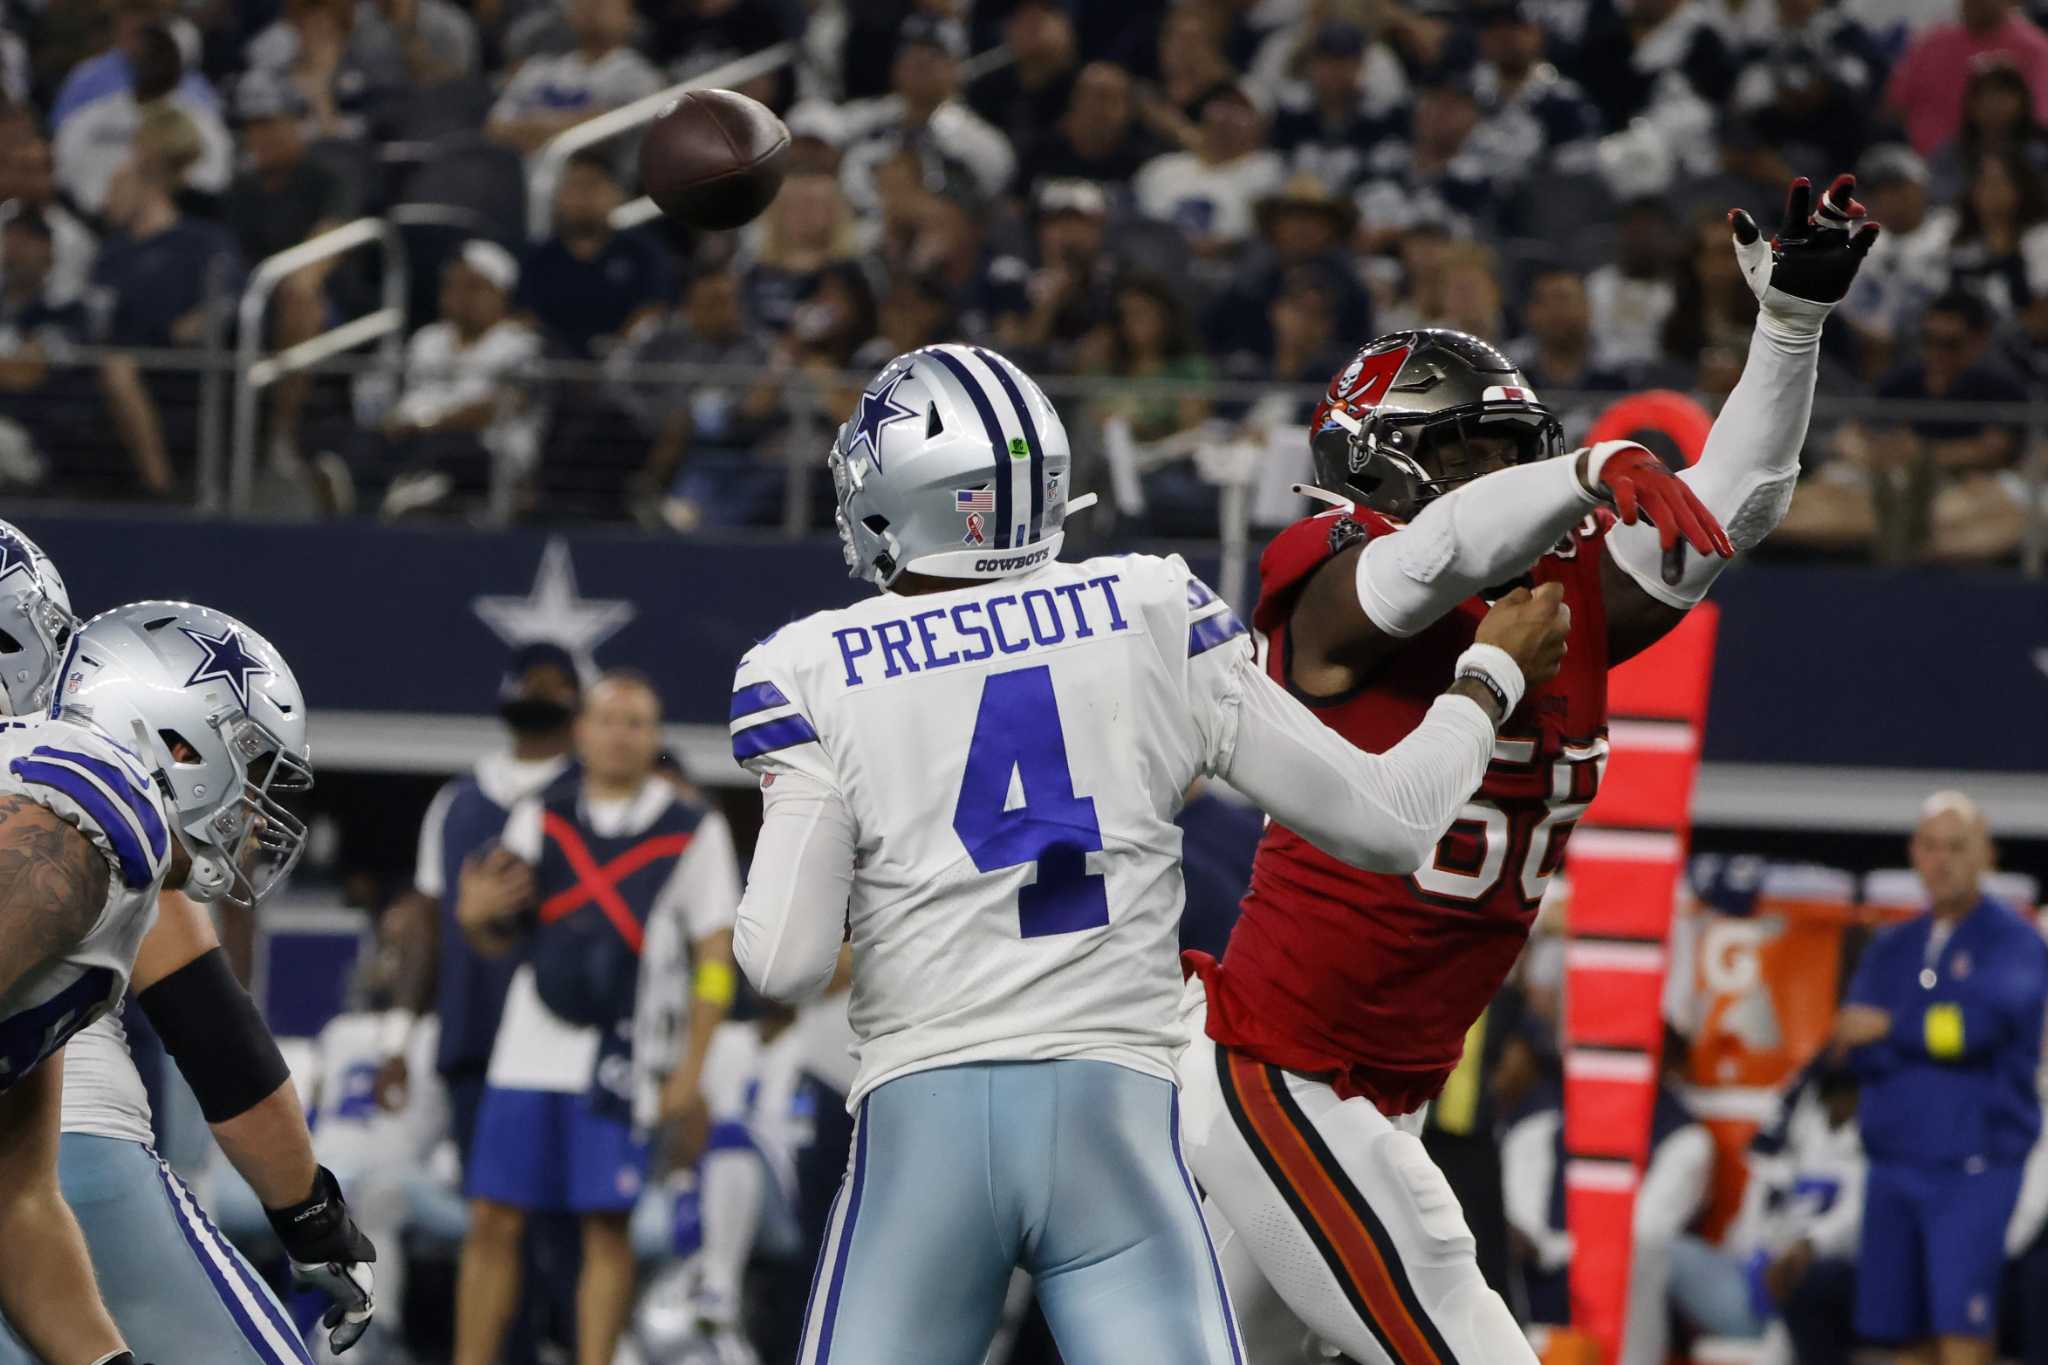 Dallas Cowboys quarterback Dak Prescott (4) looks to pass during a